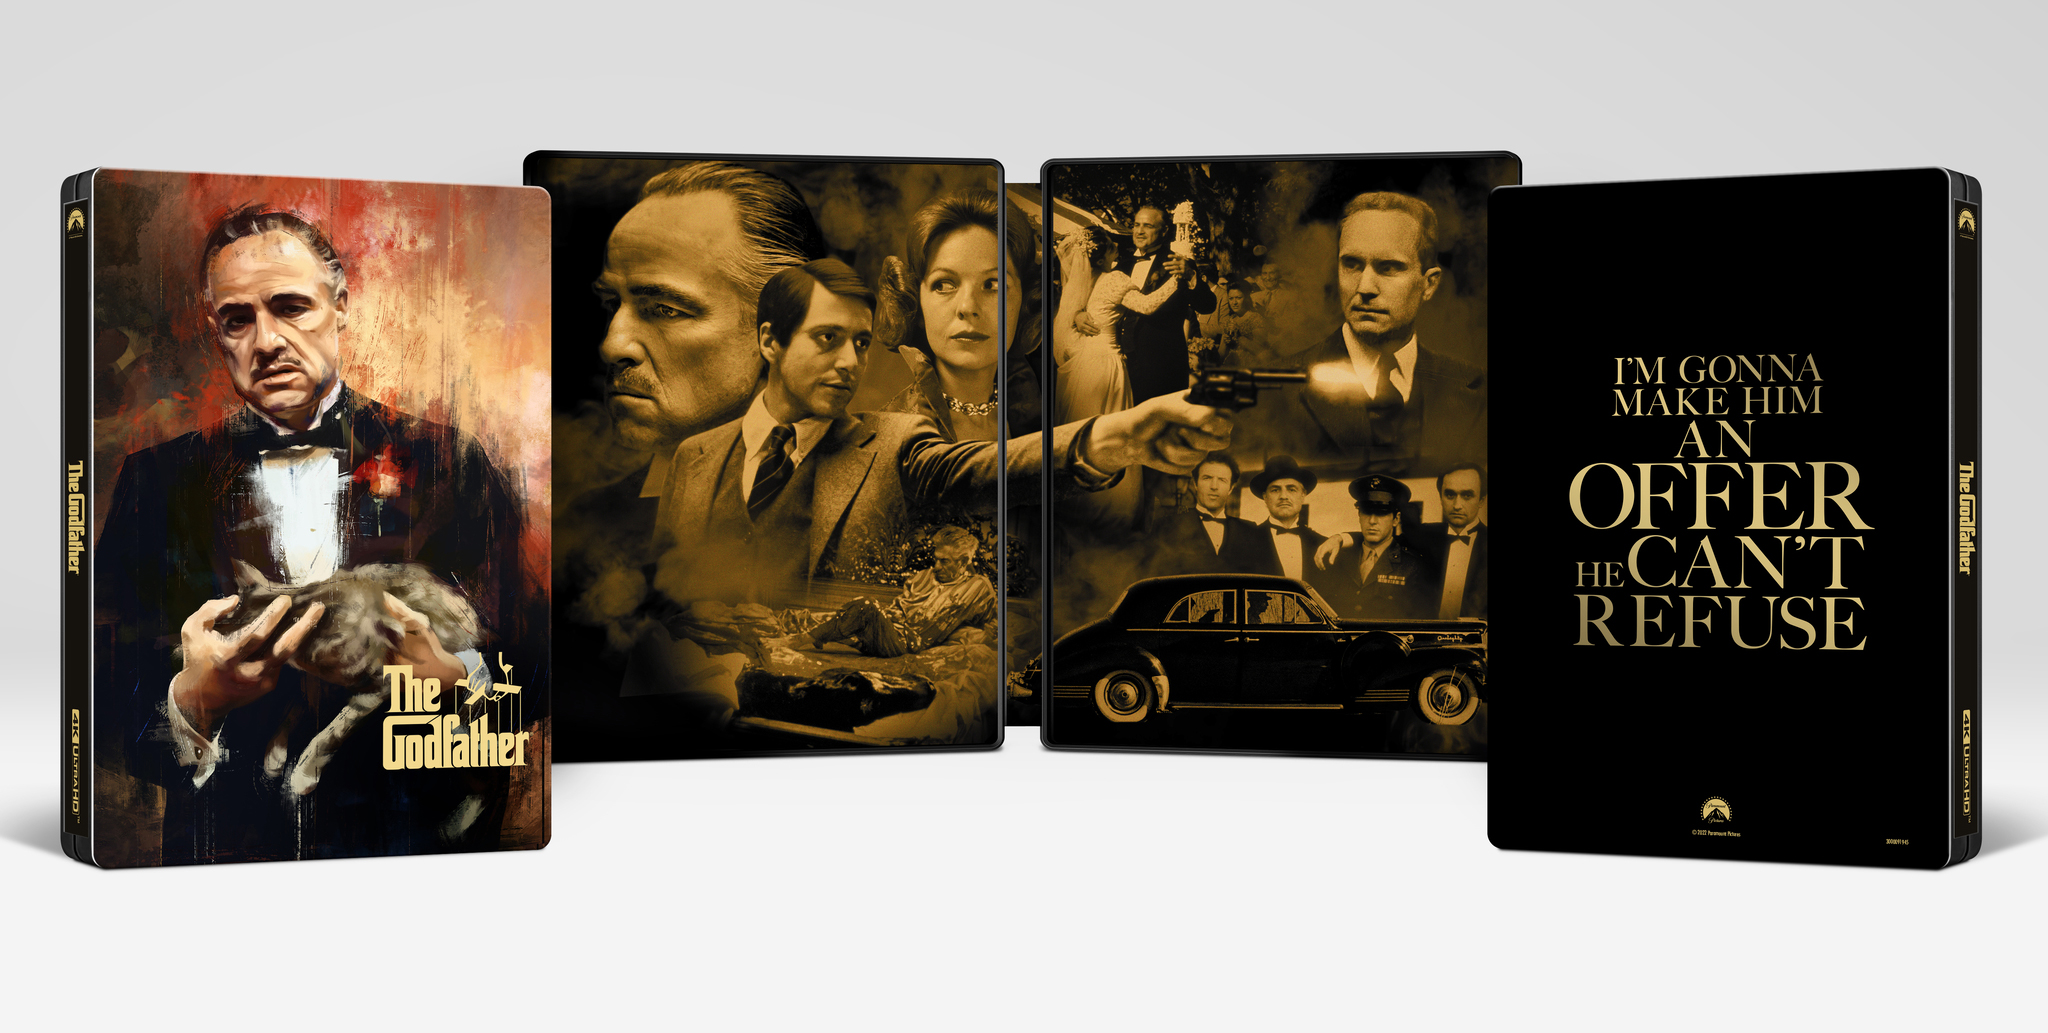 

The Godfather [SteelBook] [Includes Digital Copy] [4K Ultra HD Blu-ray] [1974]